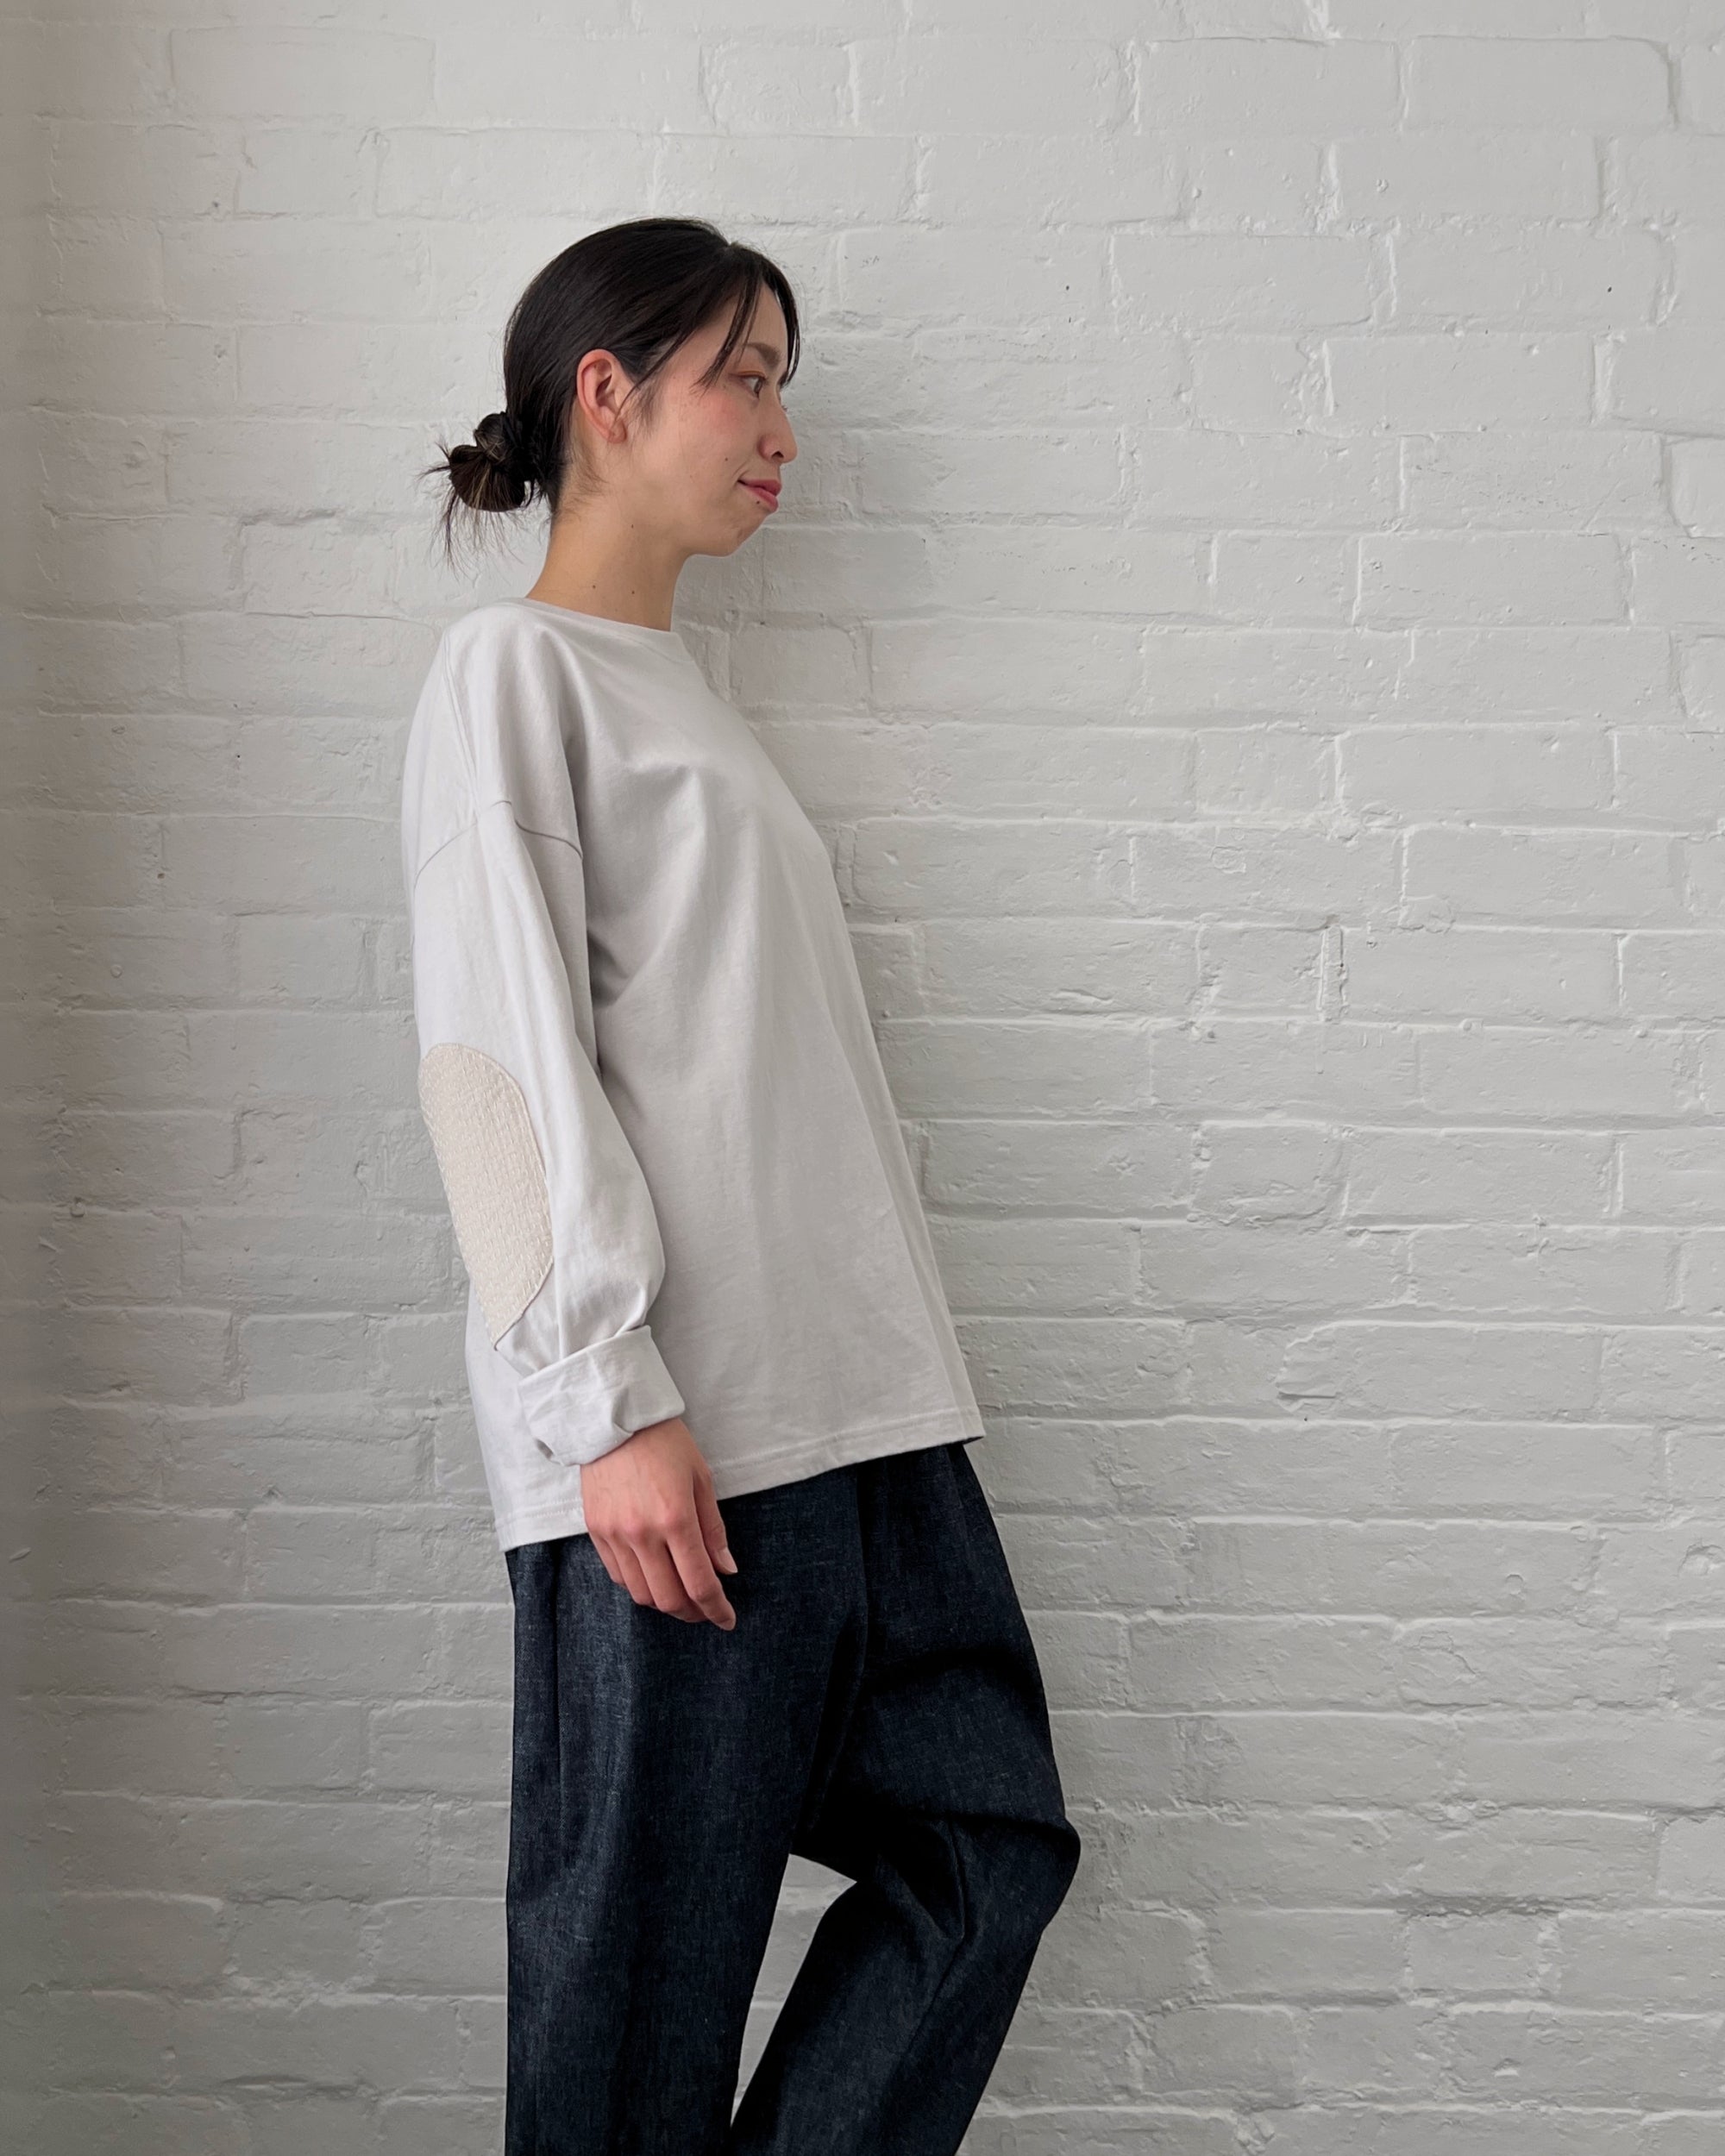 TERAS : sashiko long sleeve t-shirt